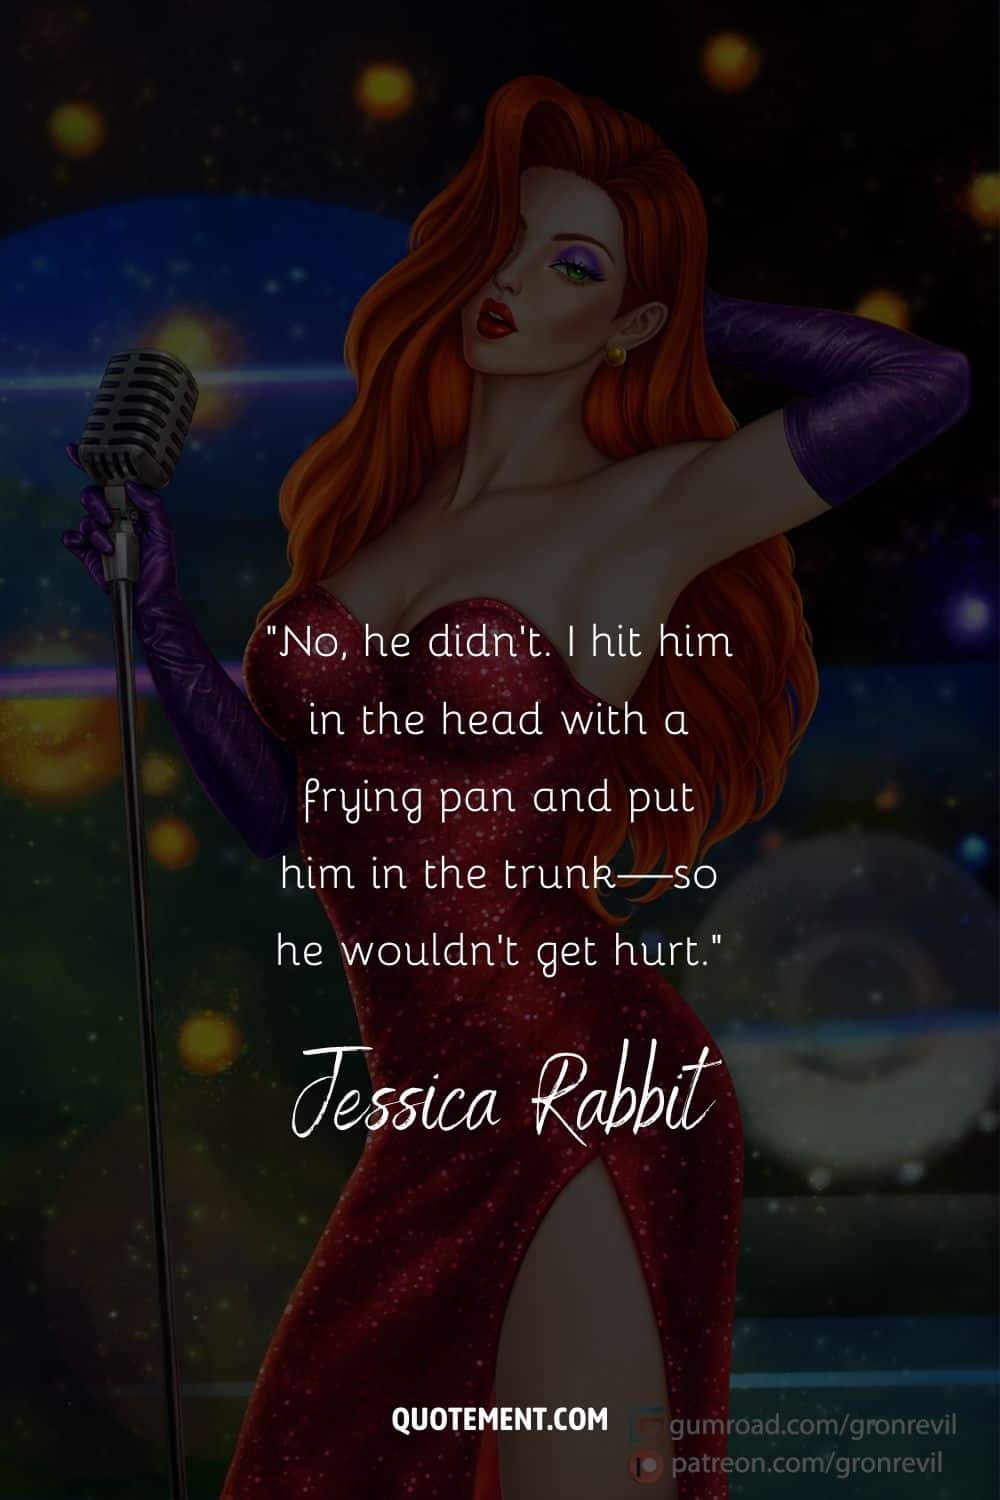 Jessica Rabbit illustration representing Jessica Rabbit movie line
